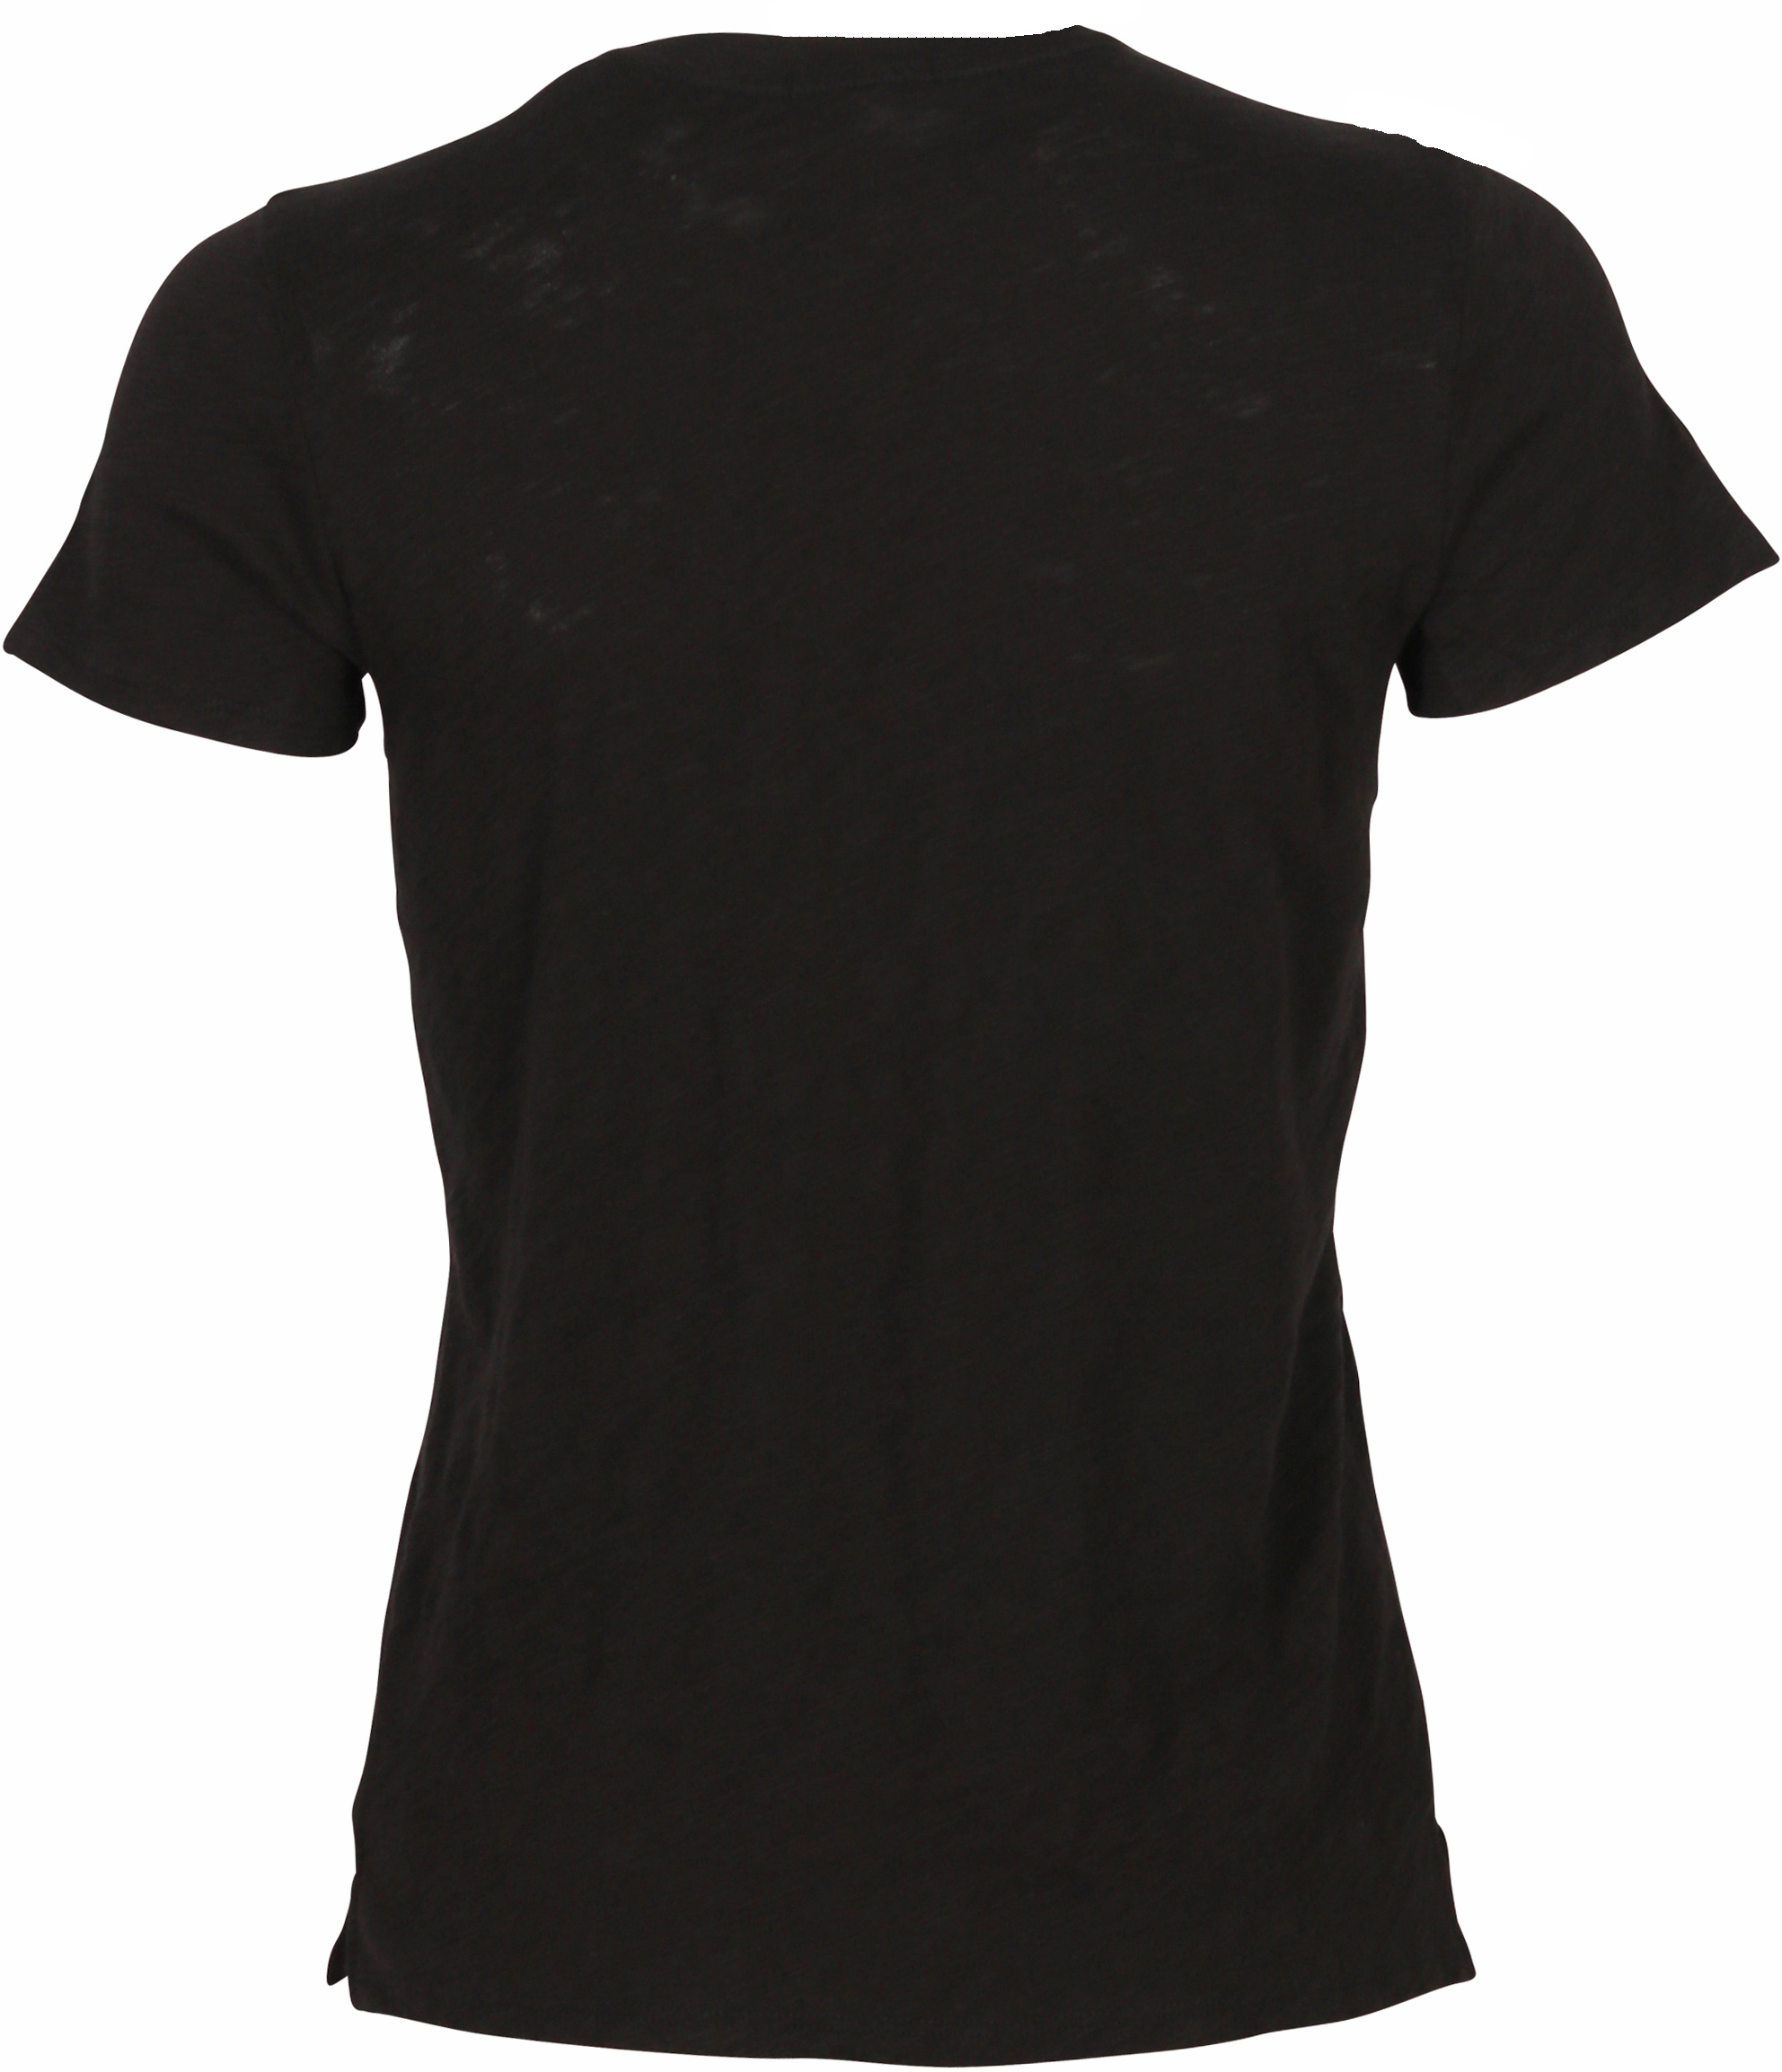 ATM Slub Jersey T-Shirt Crewneck Black